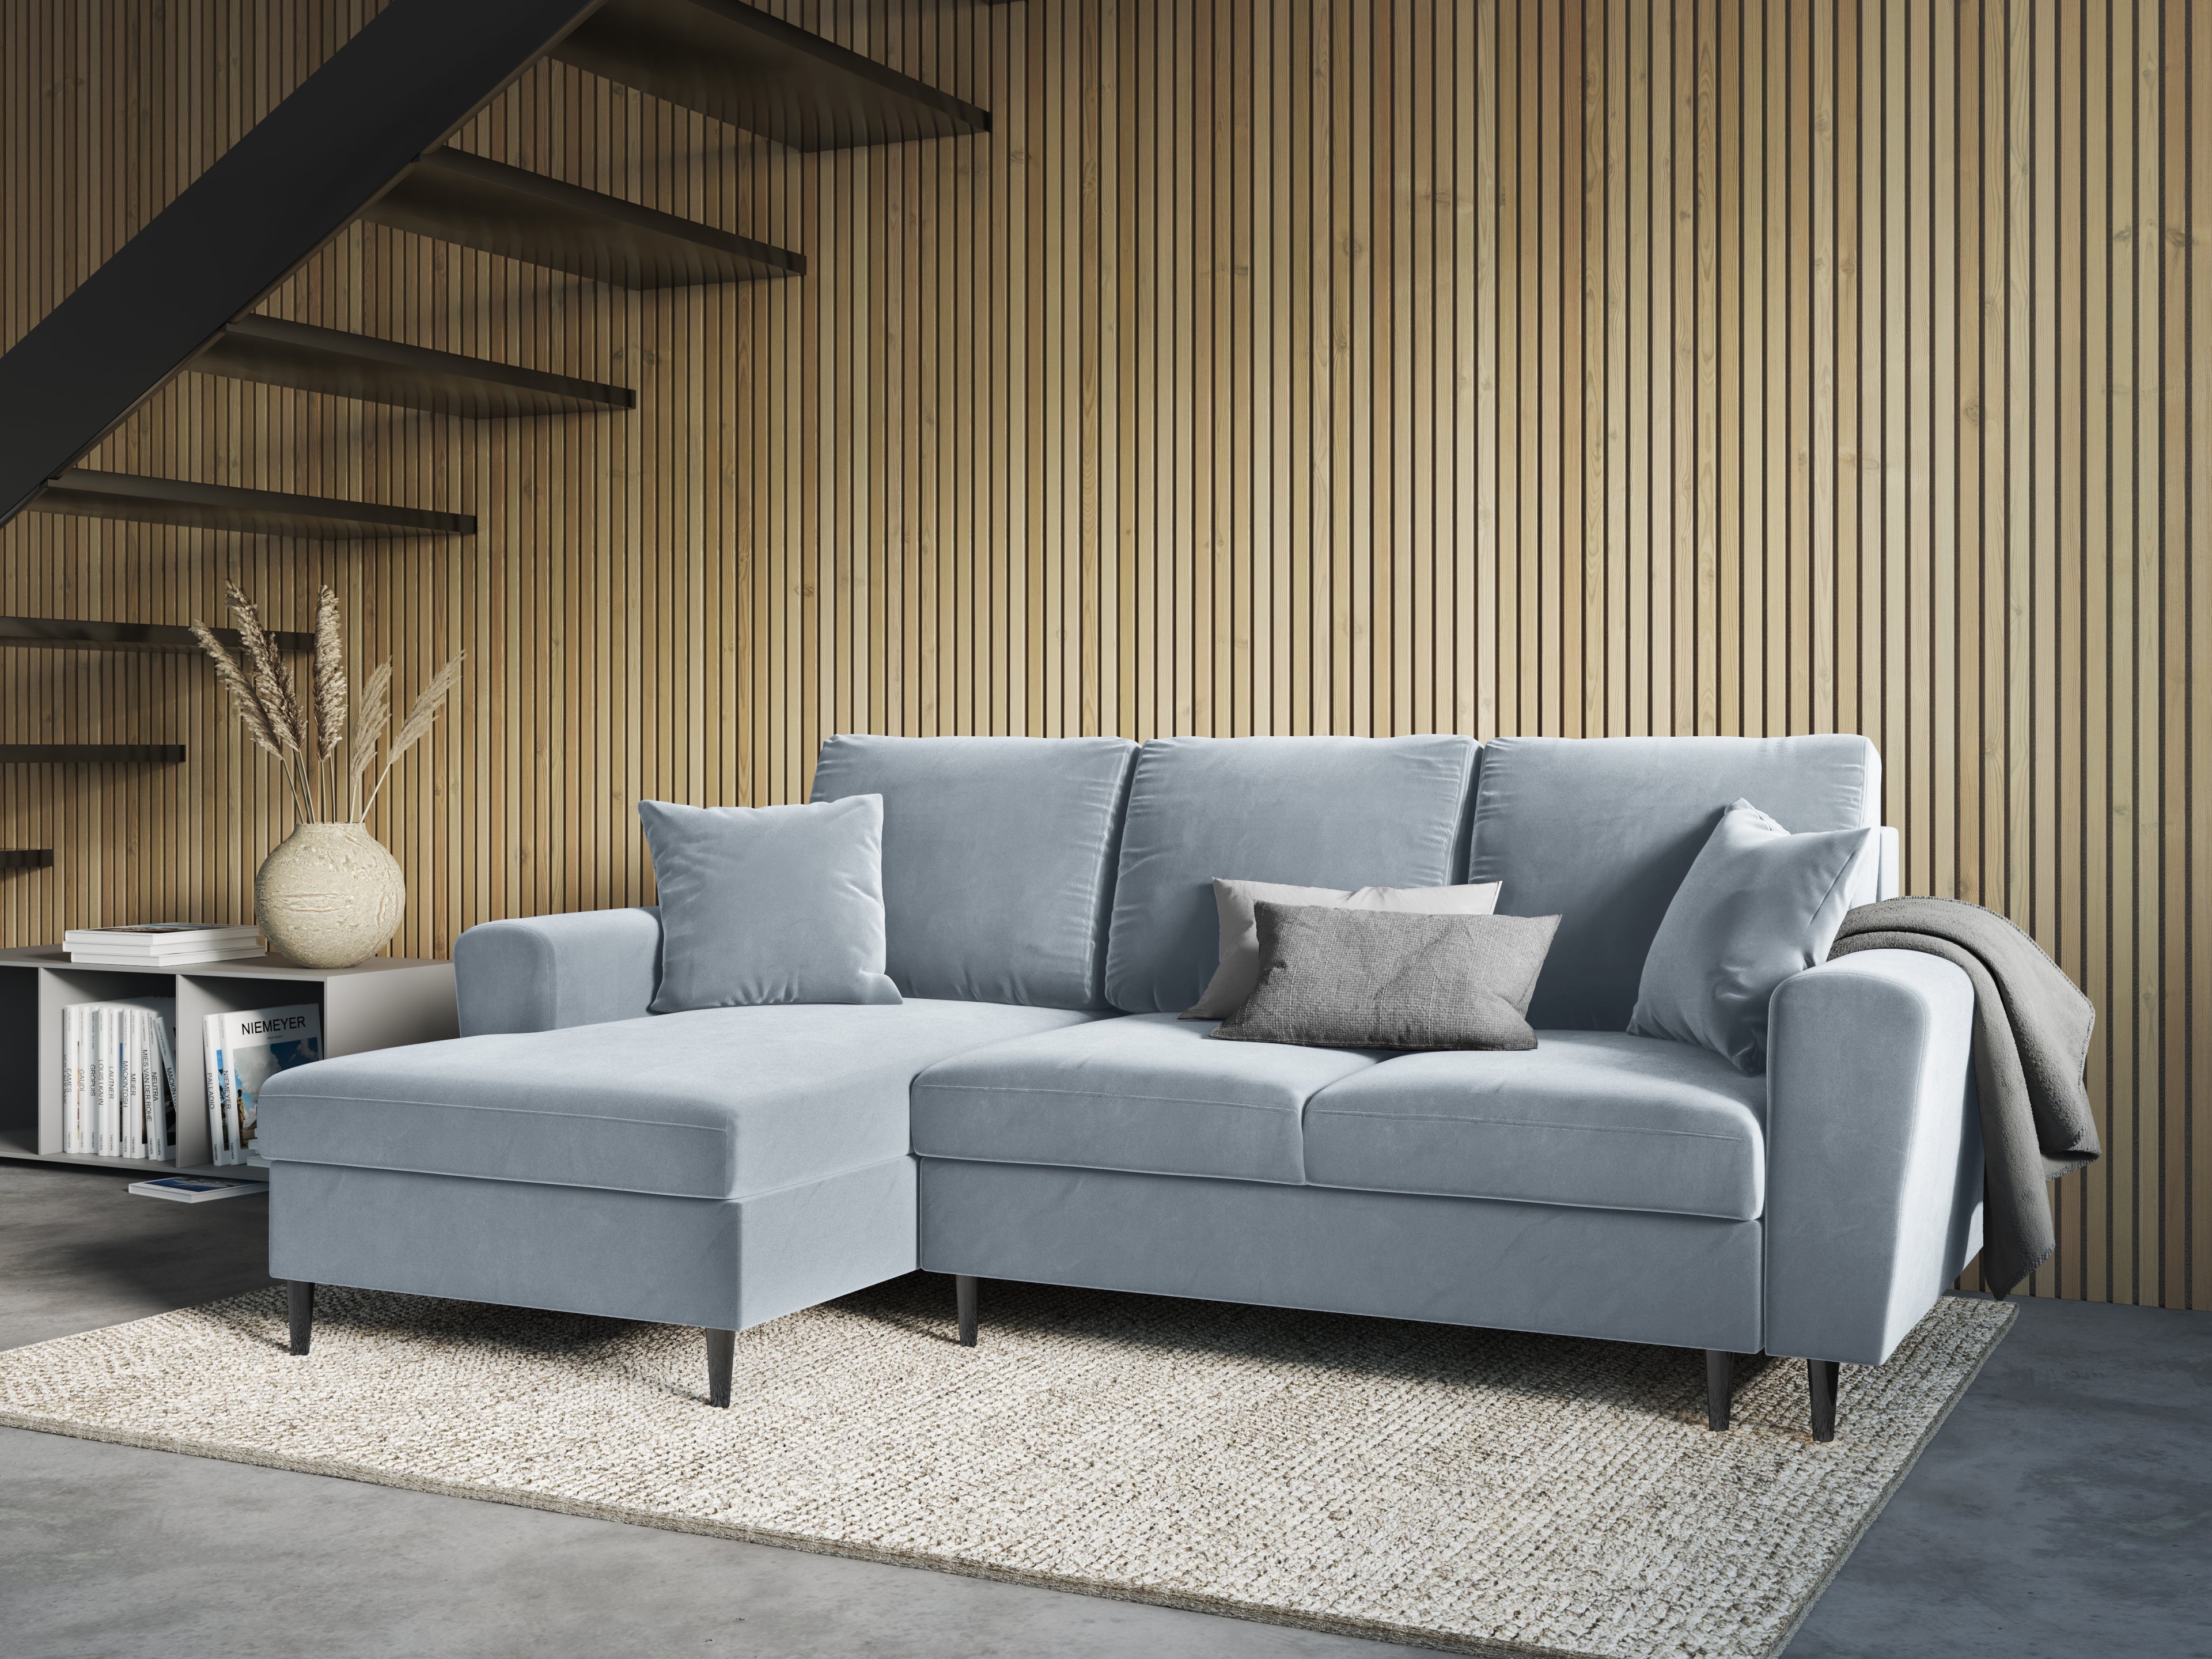 Modern Classic style sofa